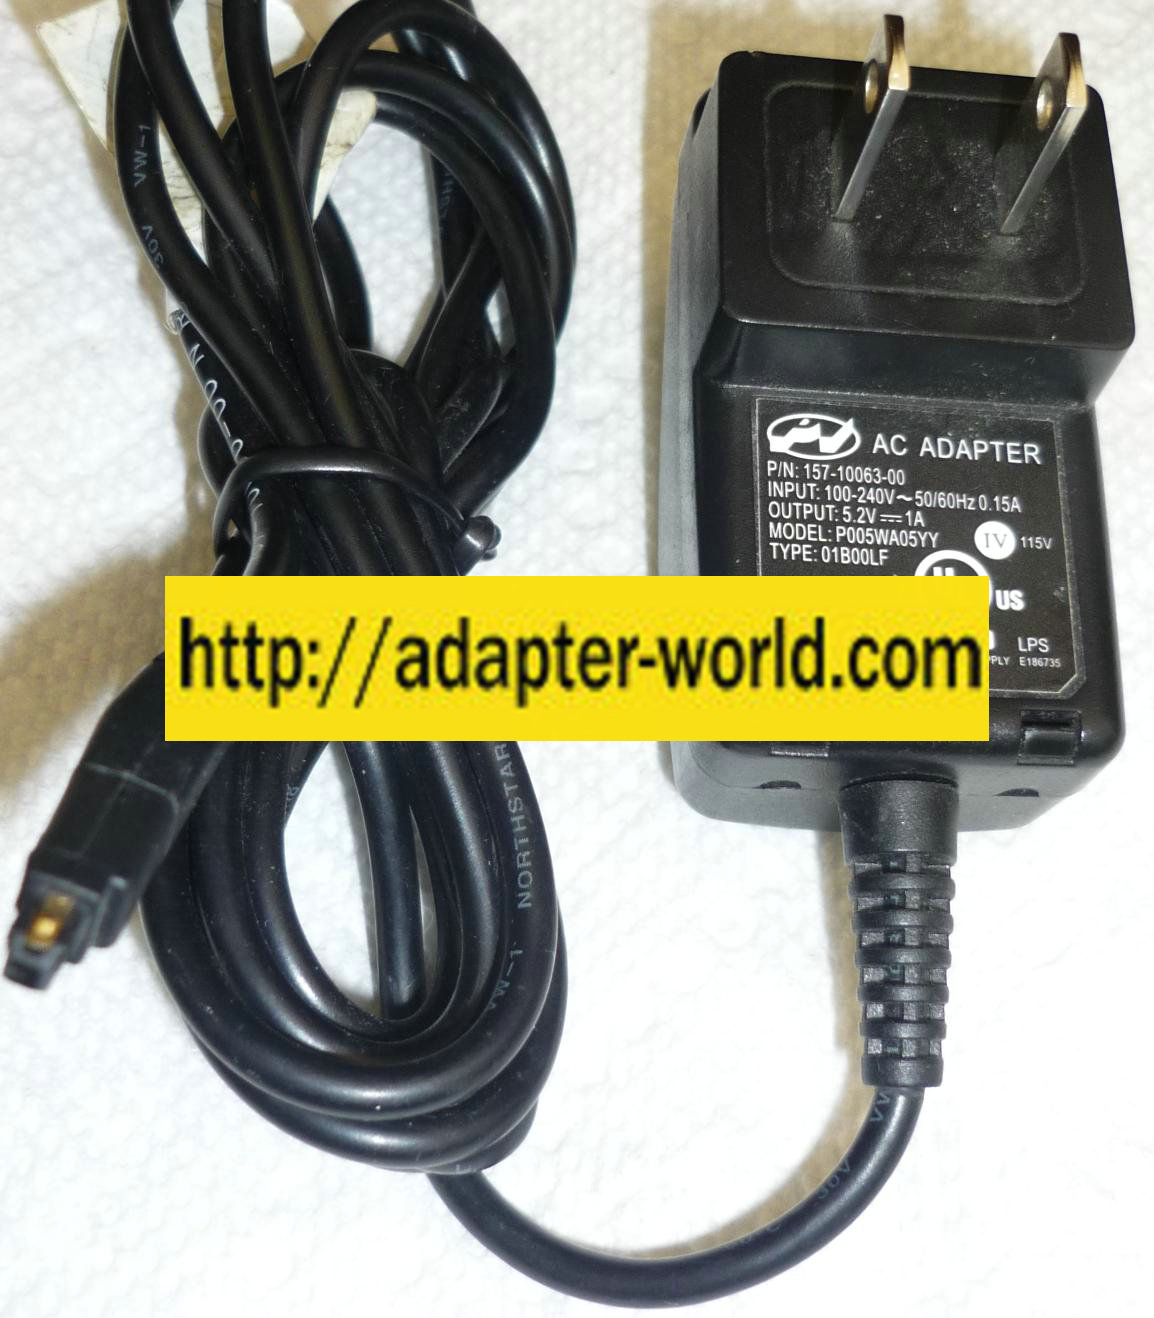 P005WA05YY AC ADAPTER 5.2VDC NEW 1A 100-240v~50-60z 0.15A 157